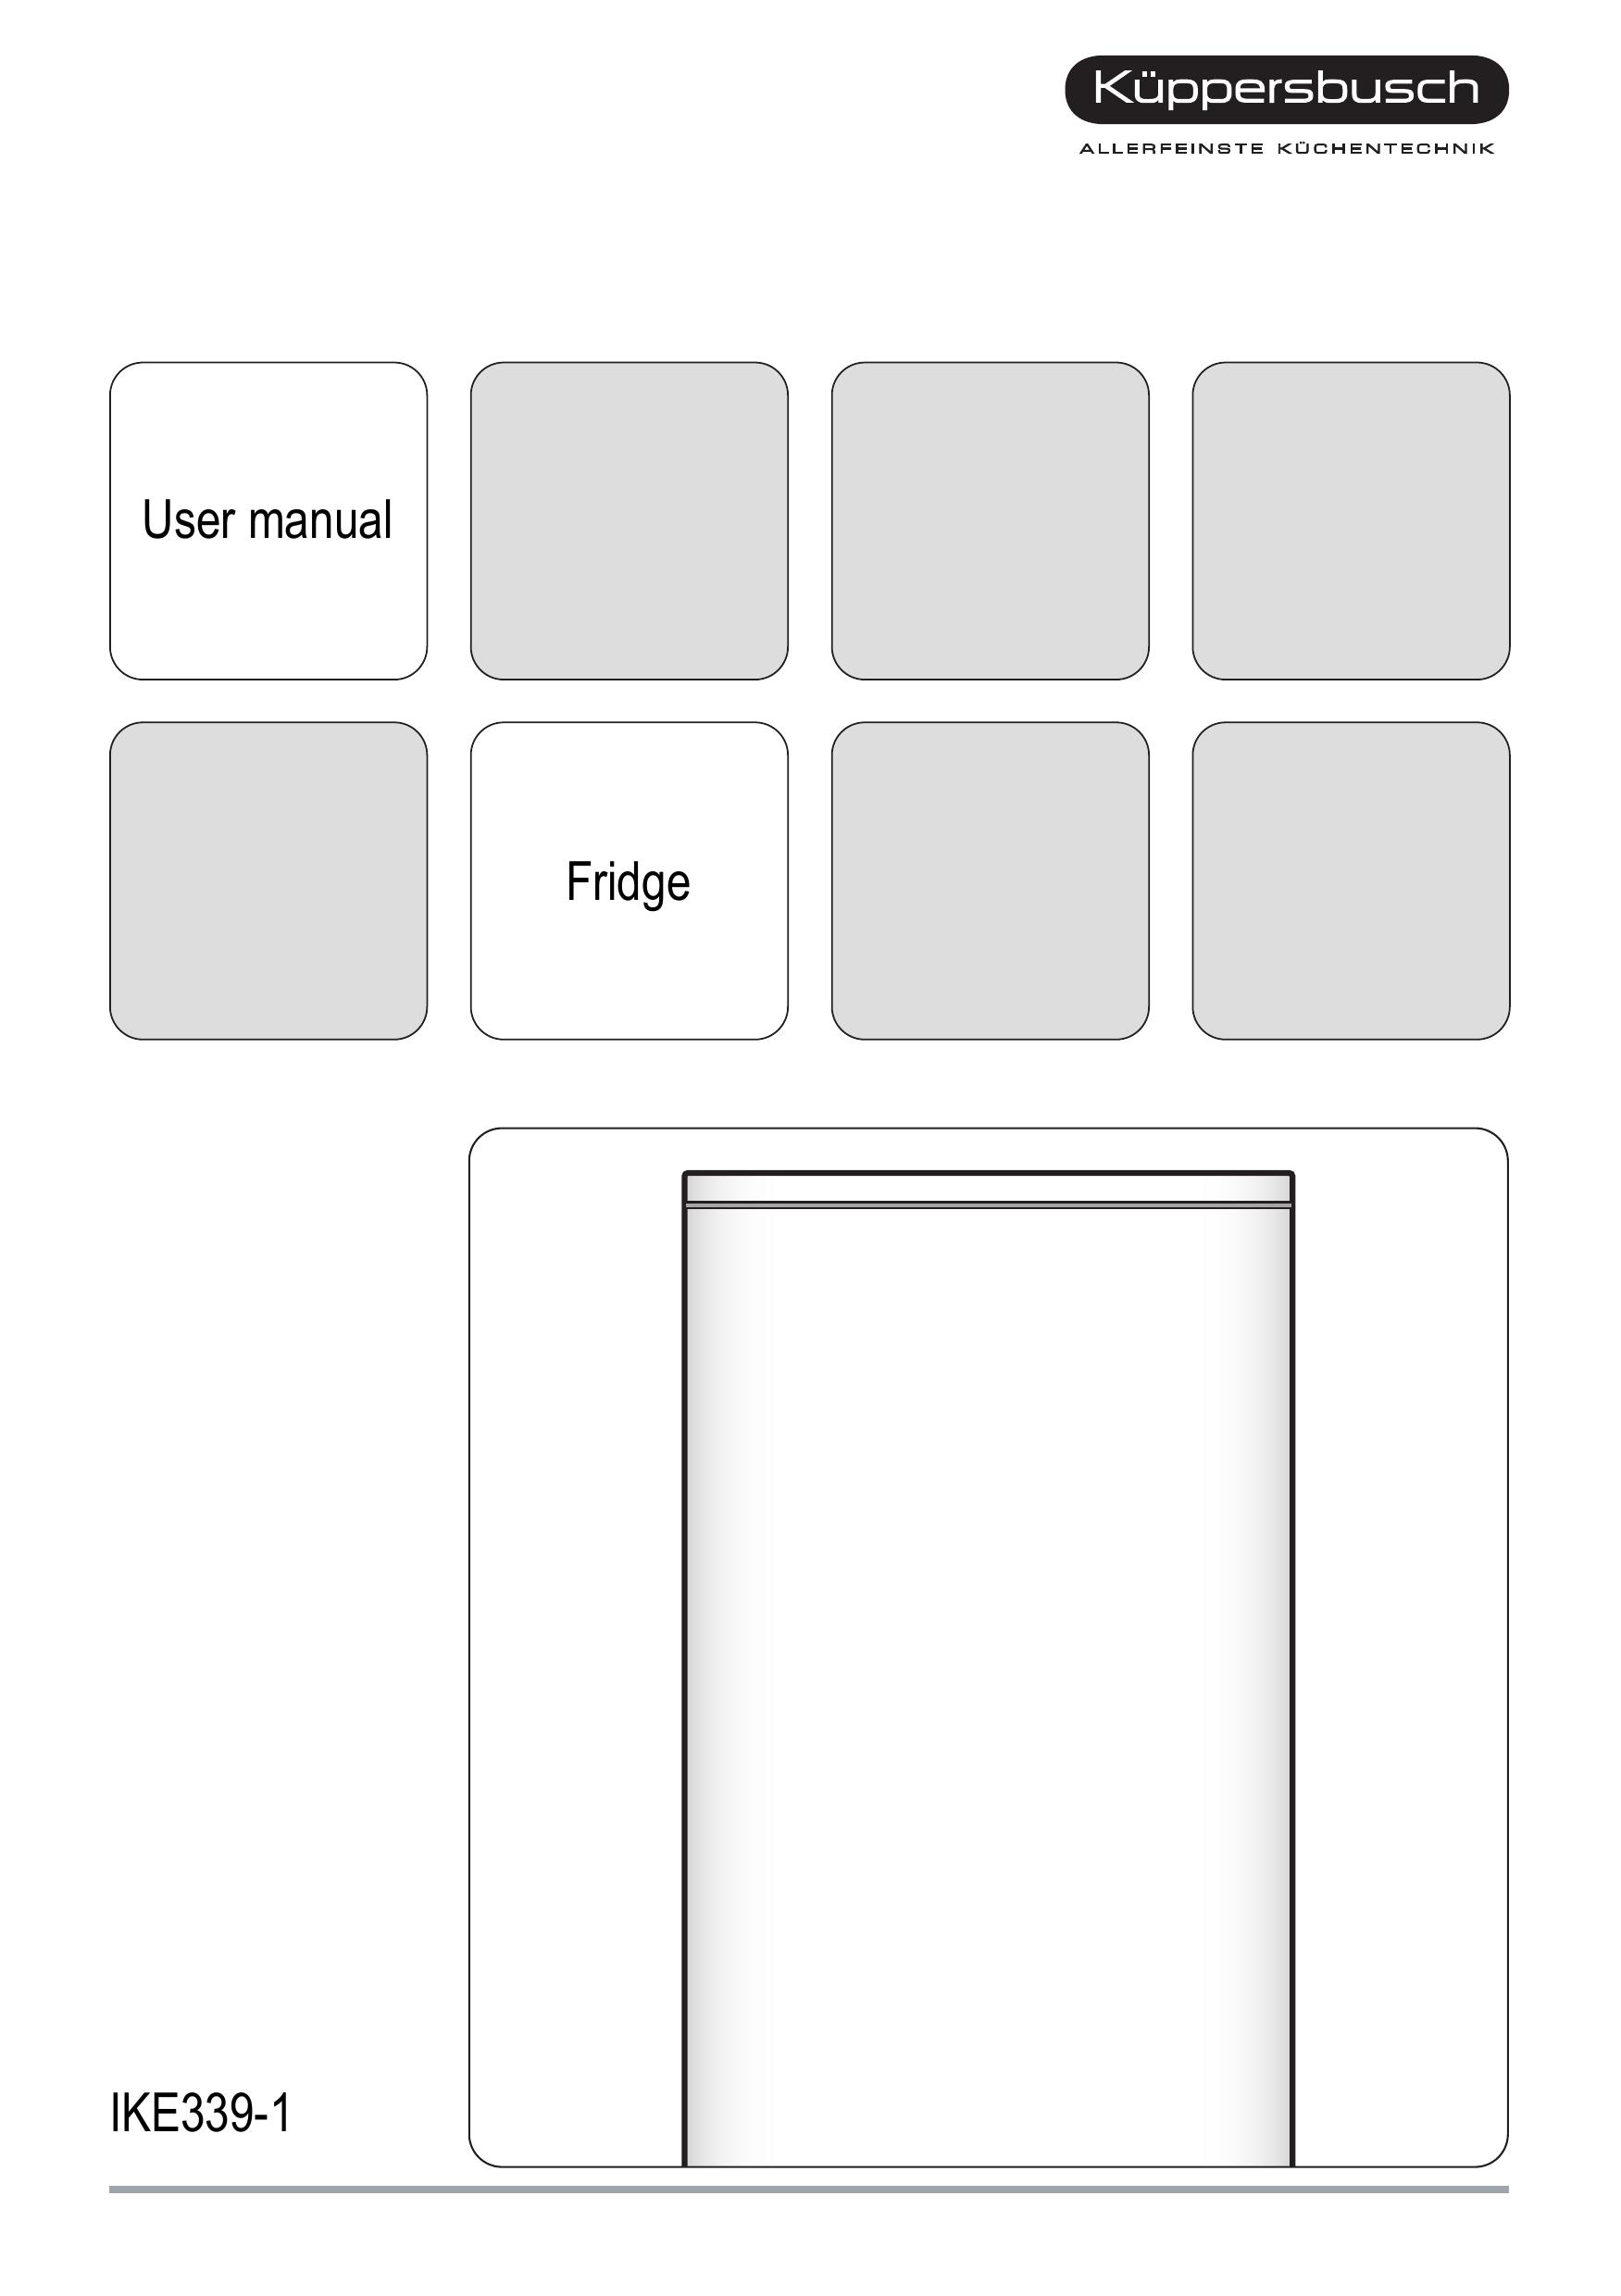 Kuppersbusch USA IKE339-1 Refrigerator User Manual